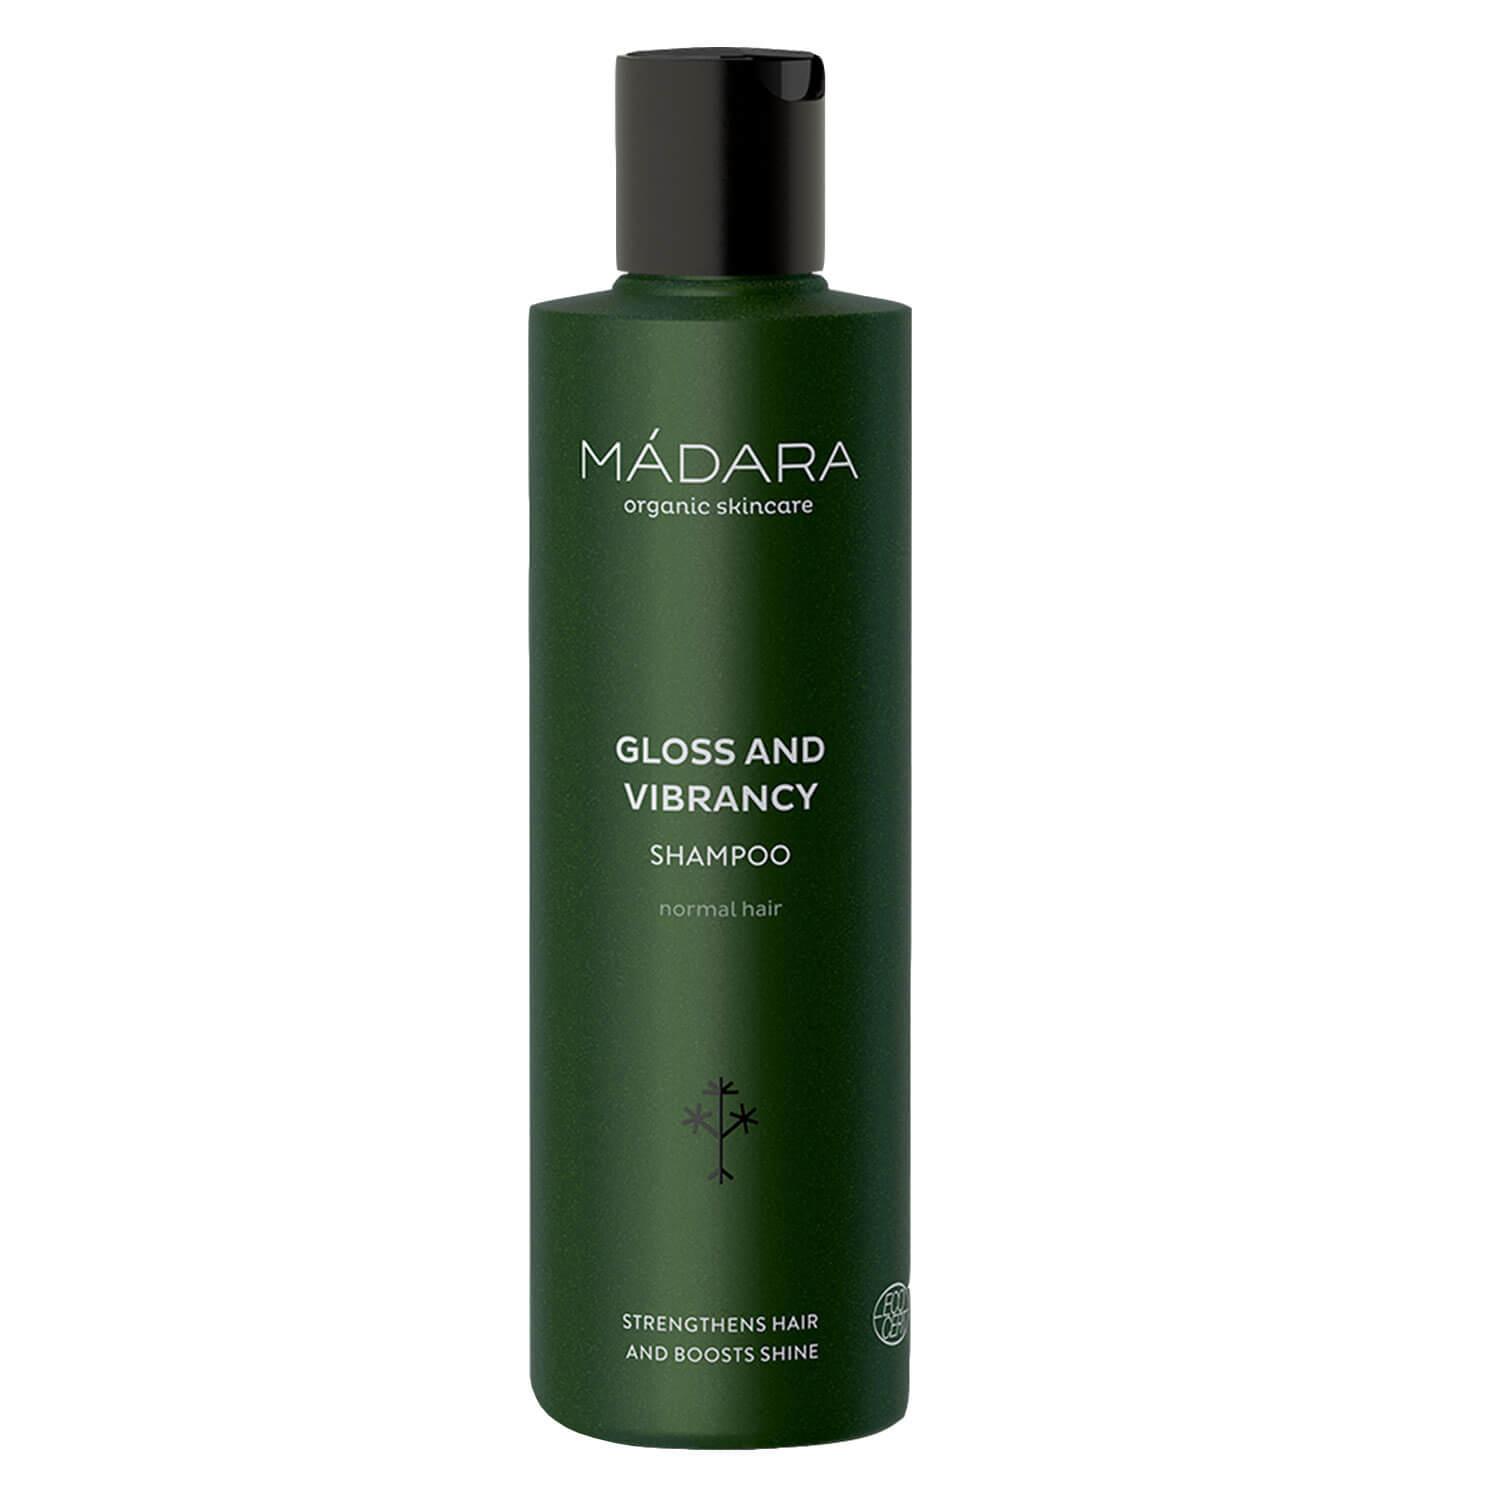 MÁDARA Hair Care - Gloss and Vibrancy Shampoo